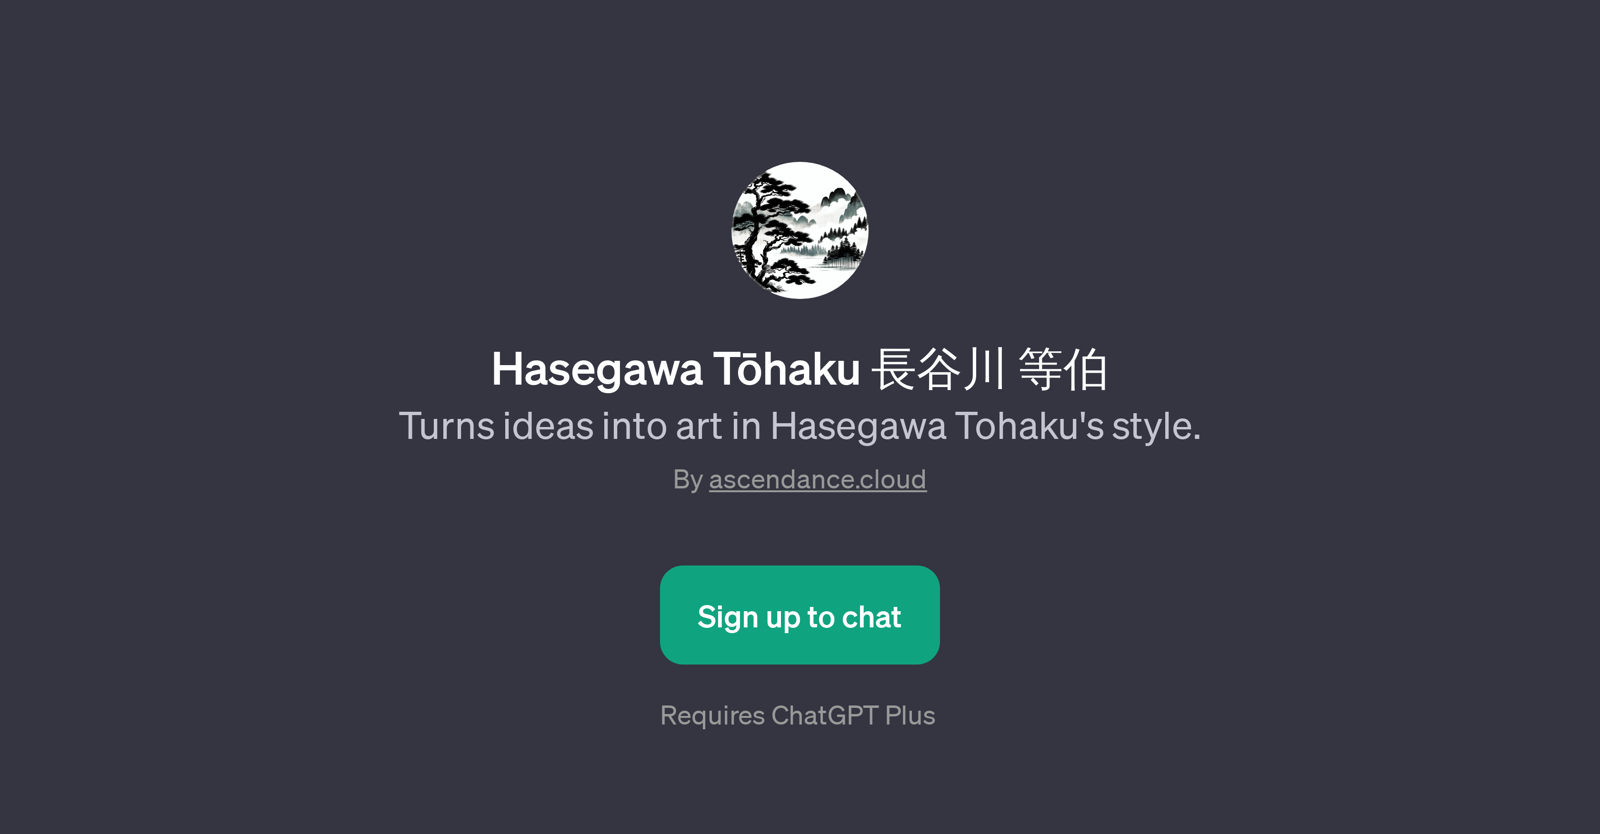 Hasegawa Thaku website